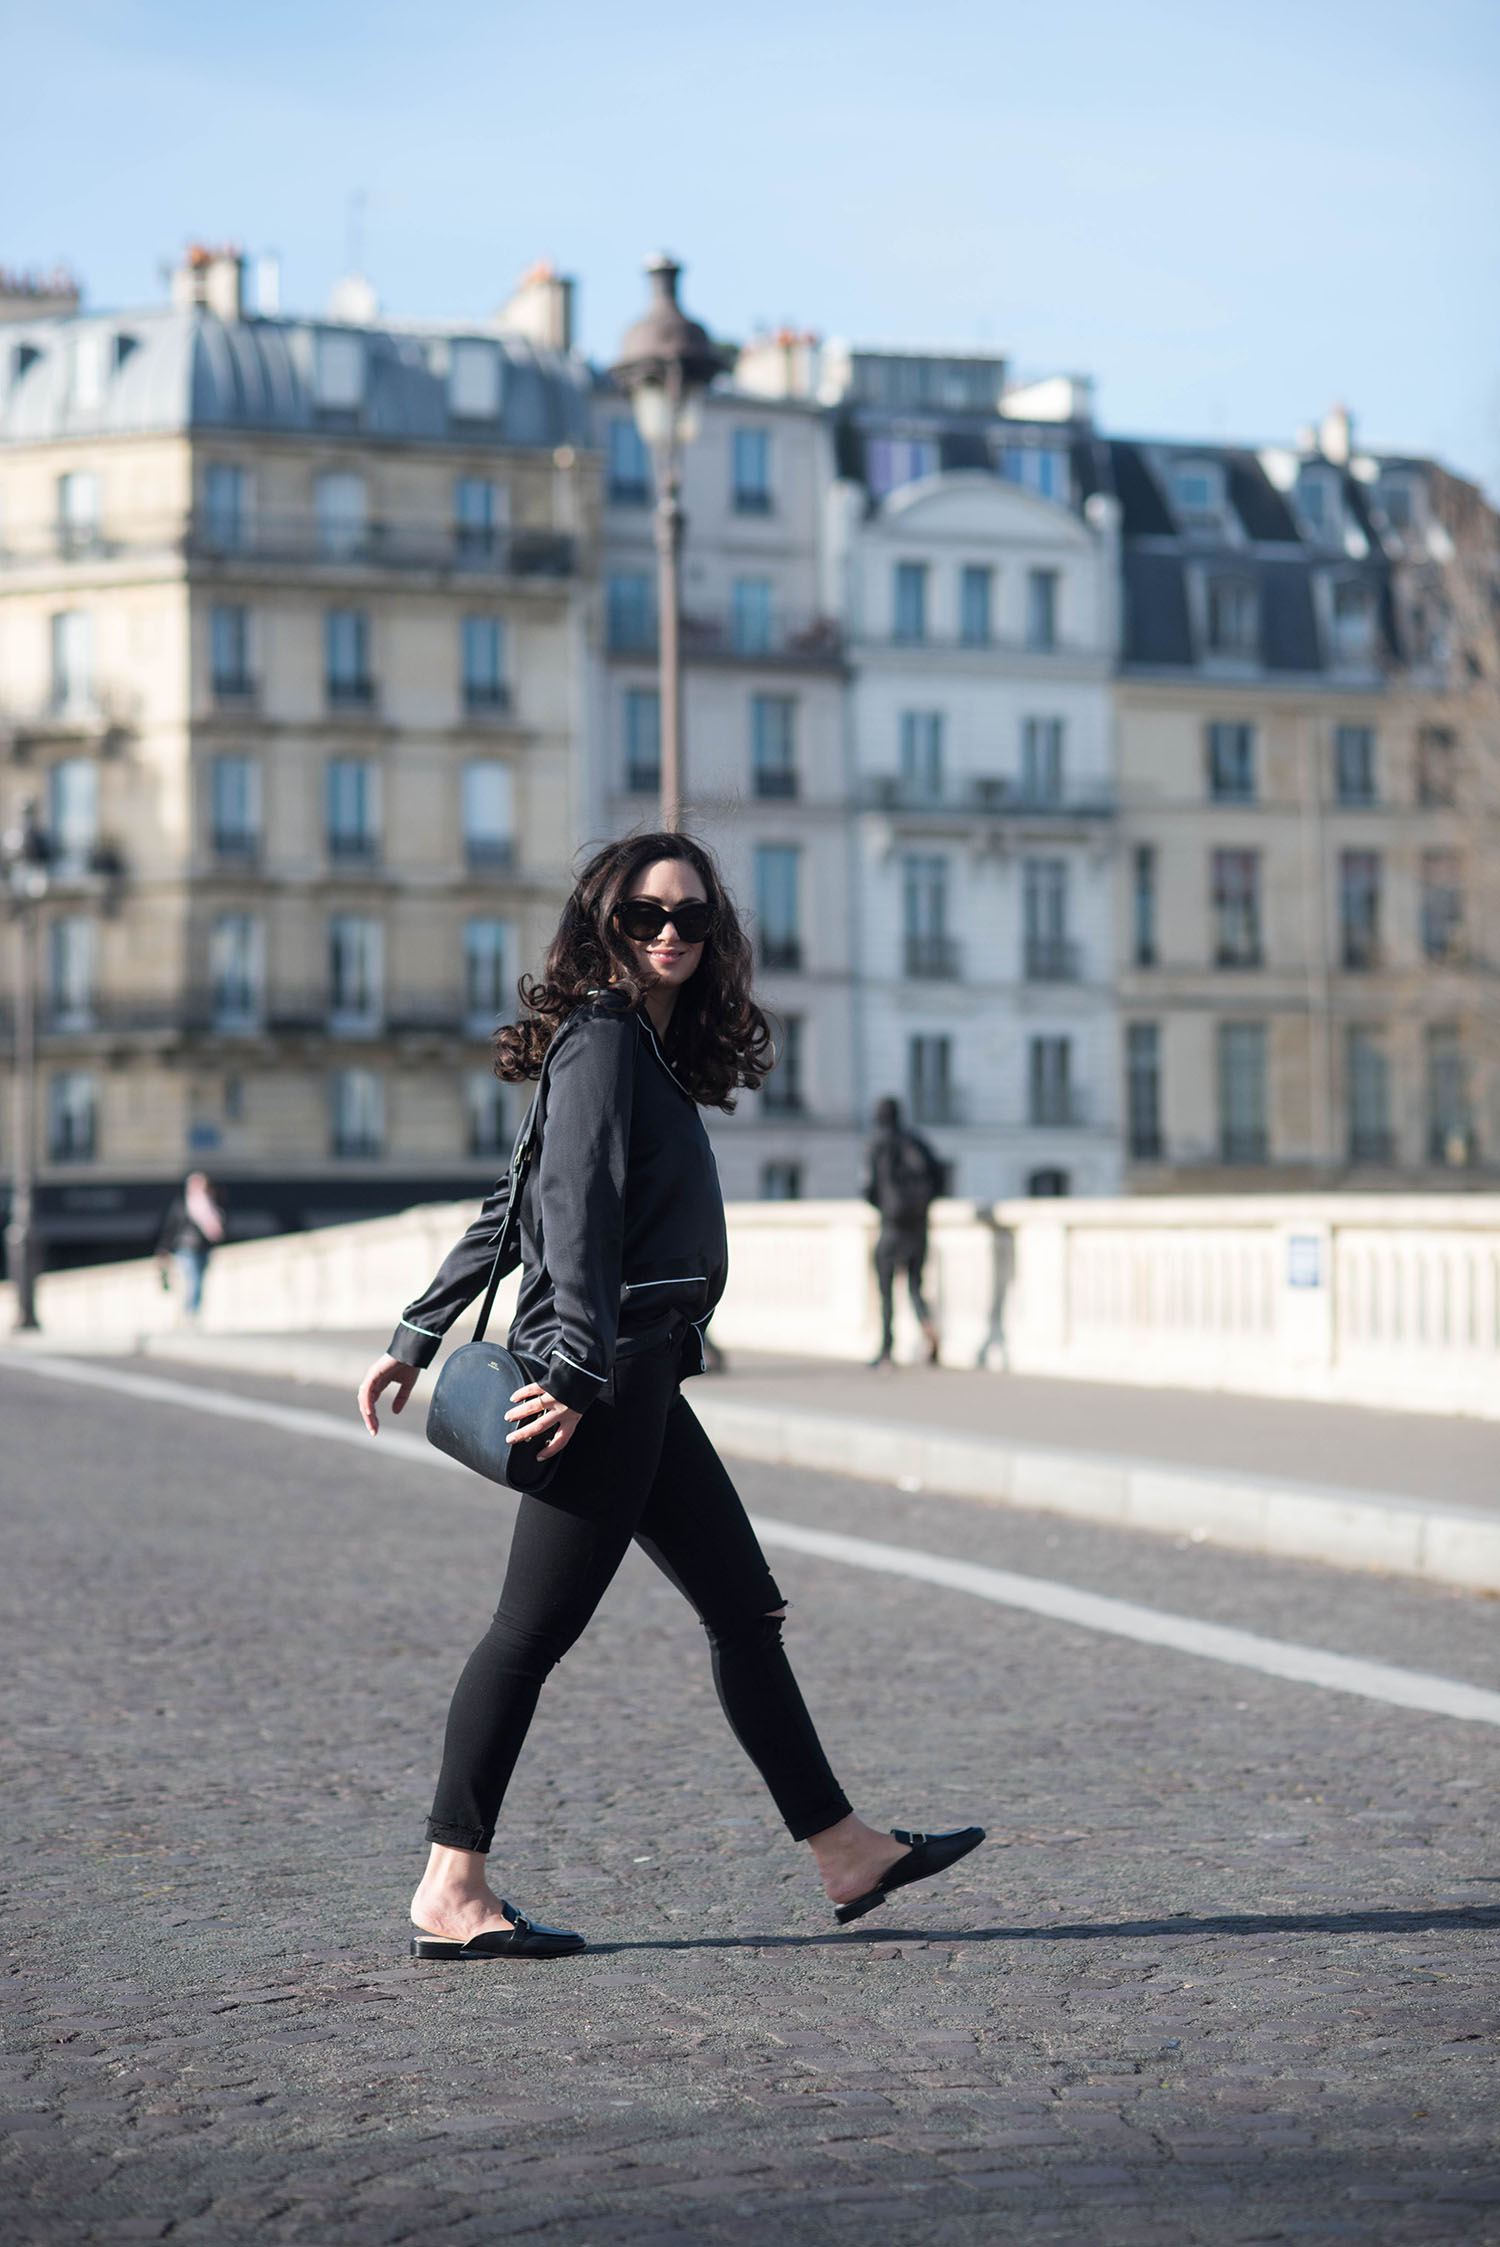 Fashion blogger Cee Fardoe of Coco & Vera wears all black in Paris, including Celine Audrey sunglasses